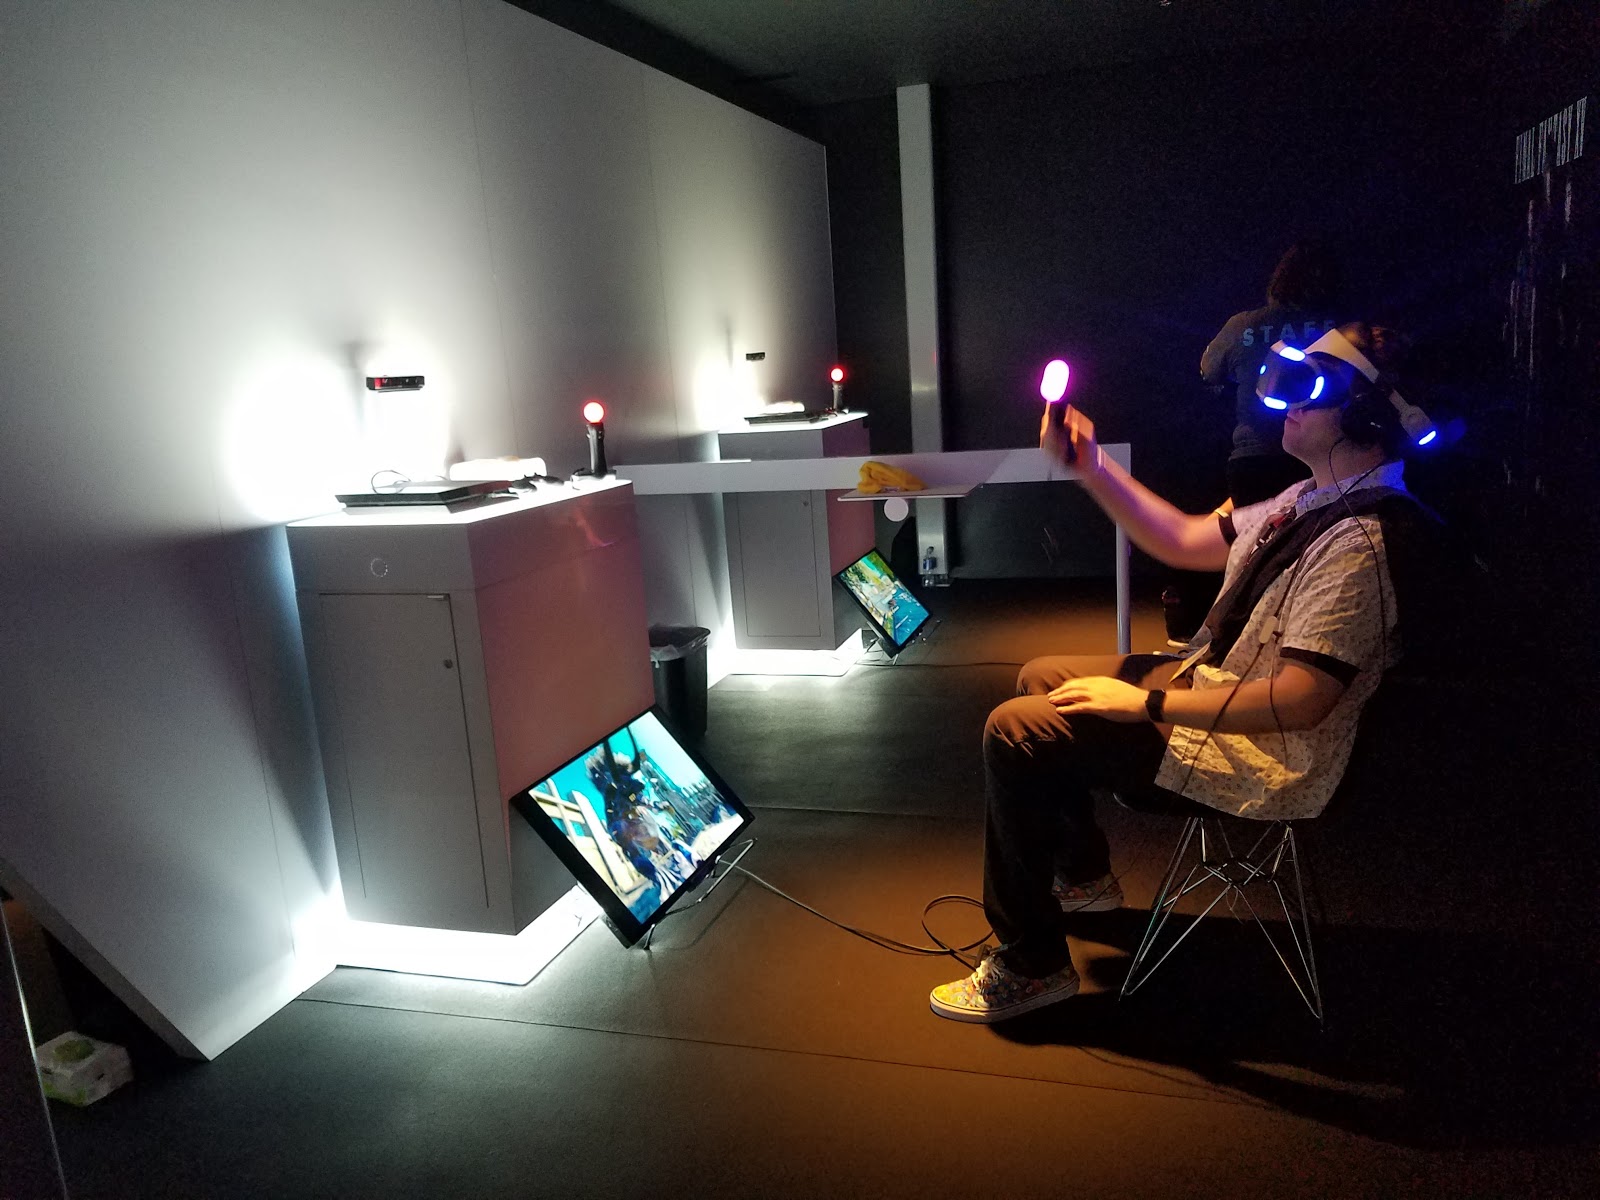 VR Makes a Big Showing at E3